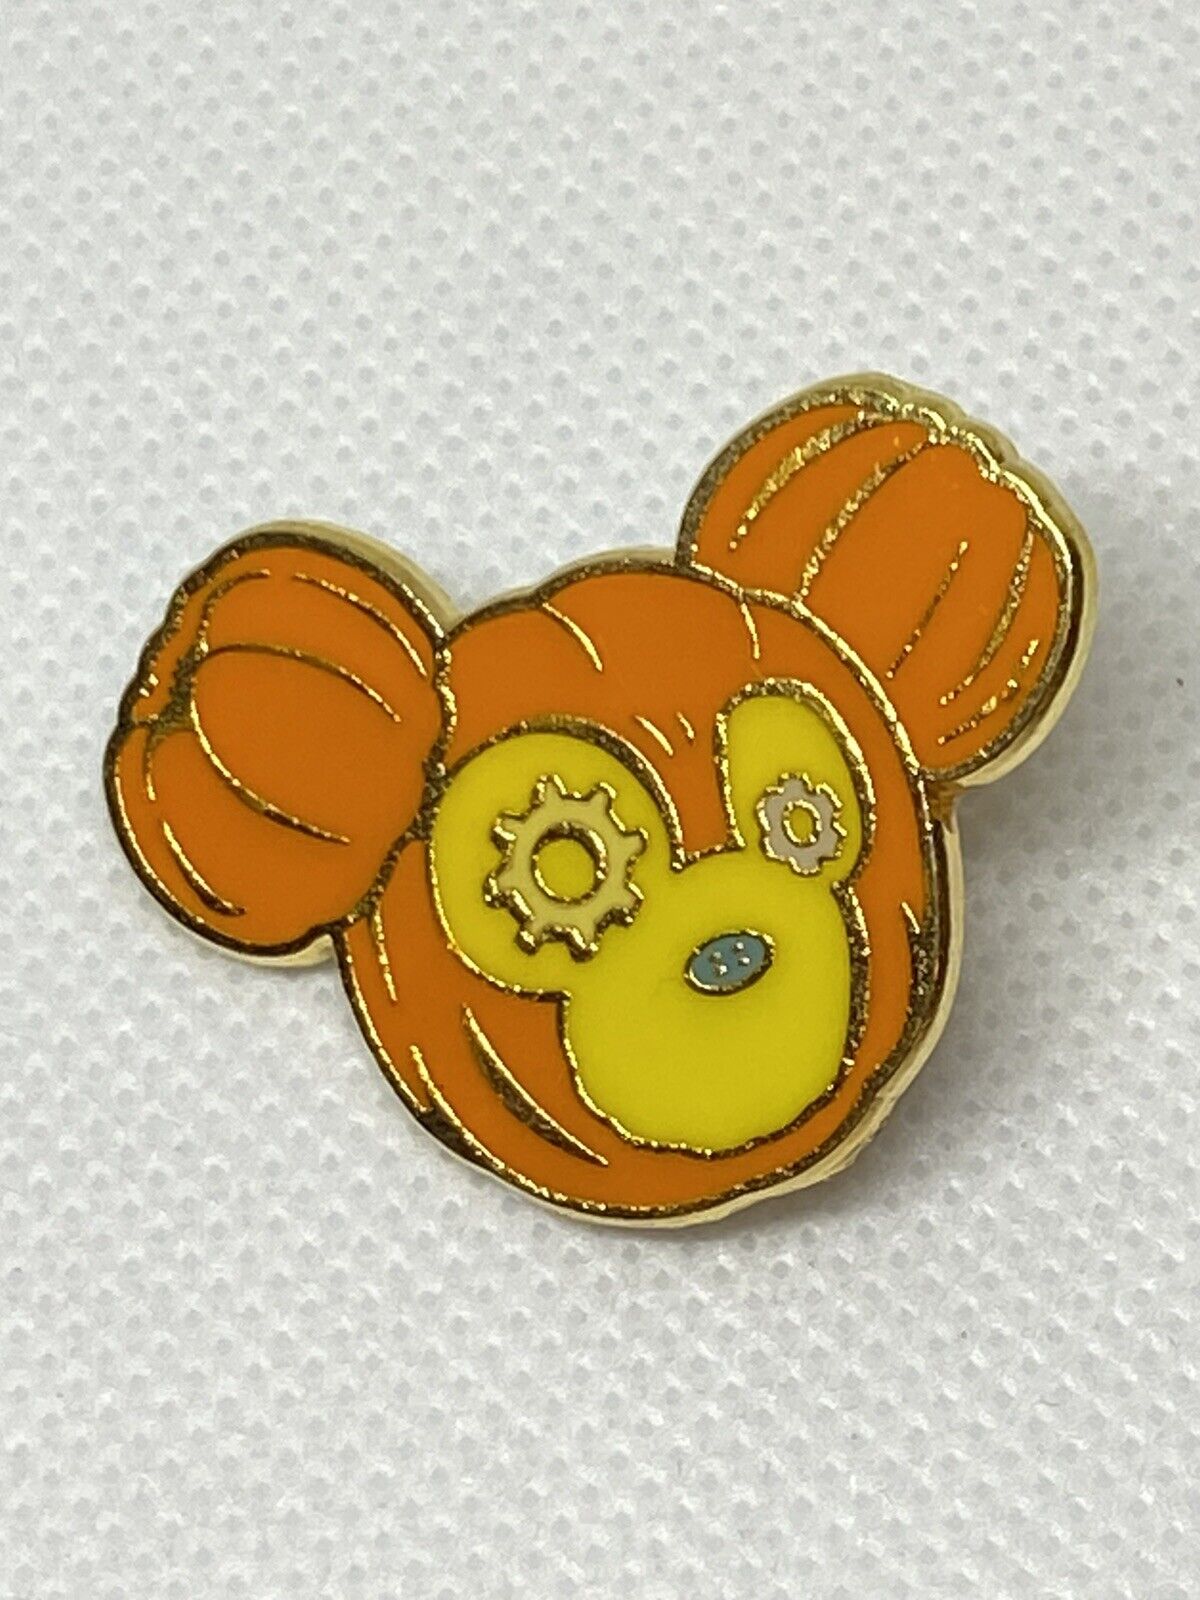 Disney Trading Pin - HKDL Halloween Pumpkin Jack O\' Lantern Duffy Bear